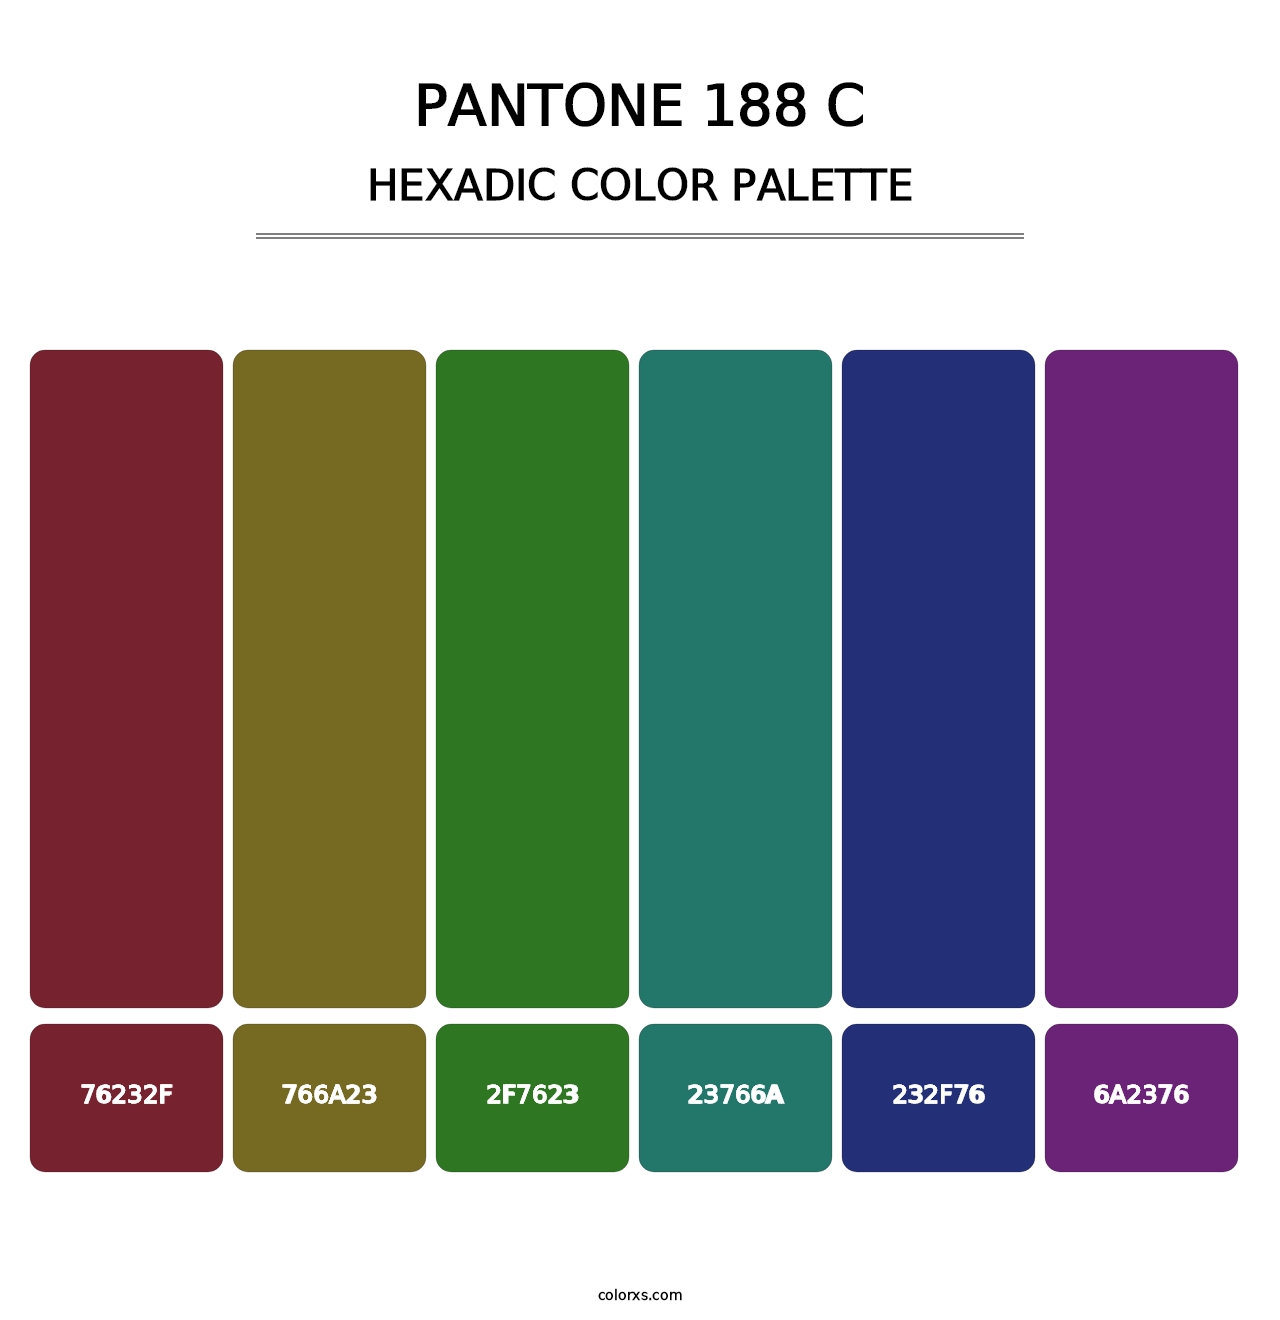 PANTONE 188 C - Hexadic Color Palette